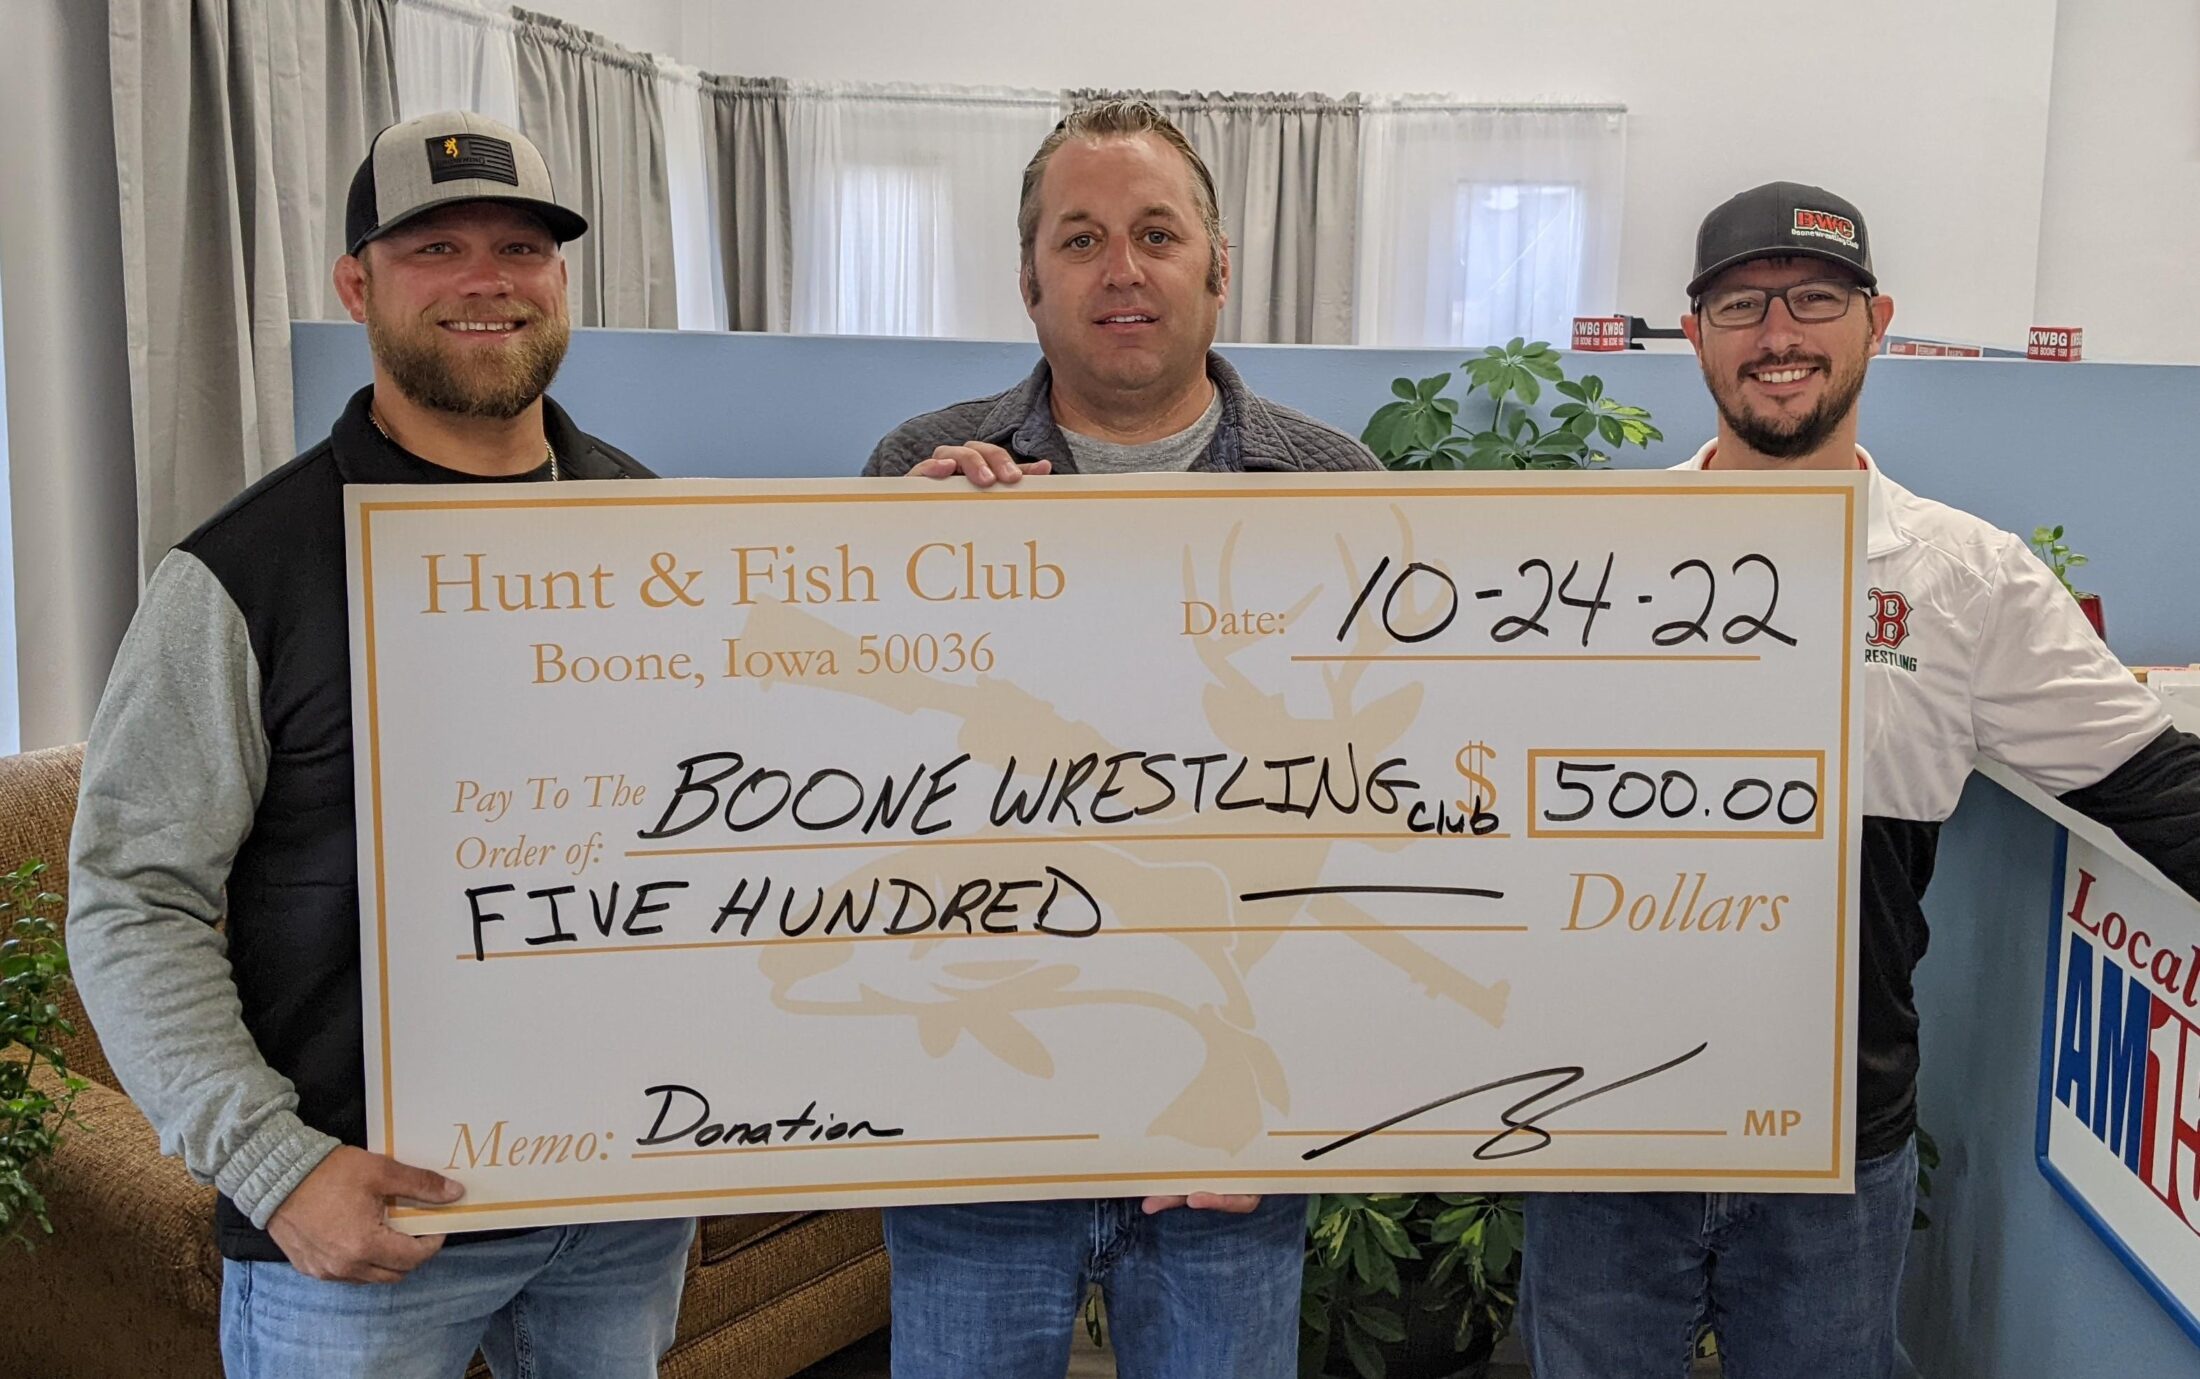 Hunt & Fish Club donates to Boone Wrestling Club